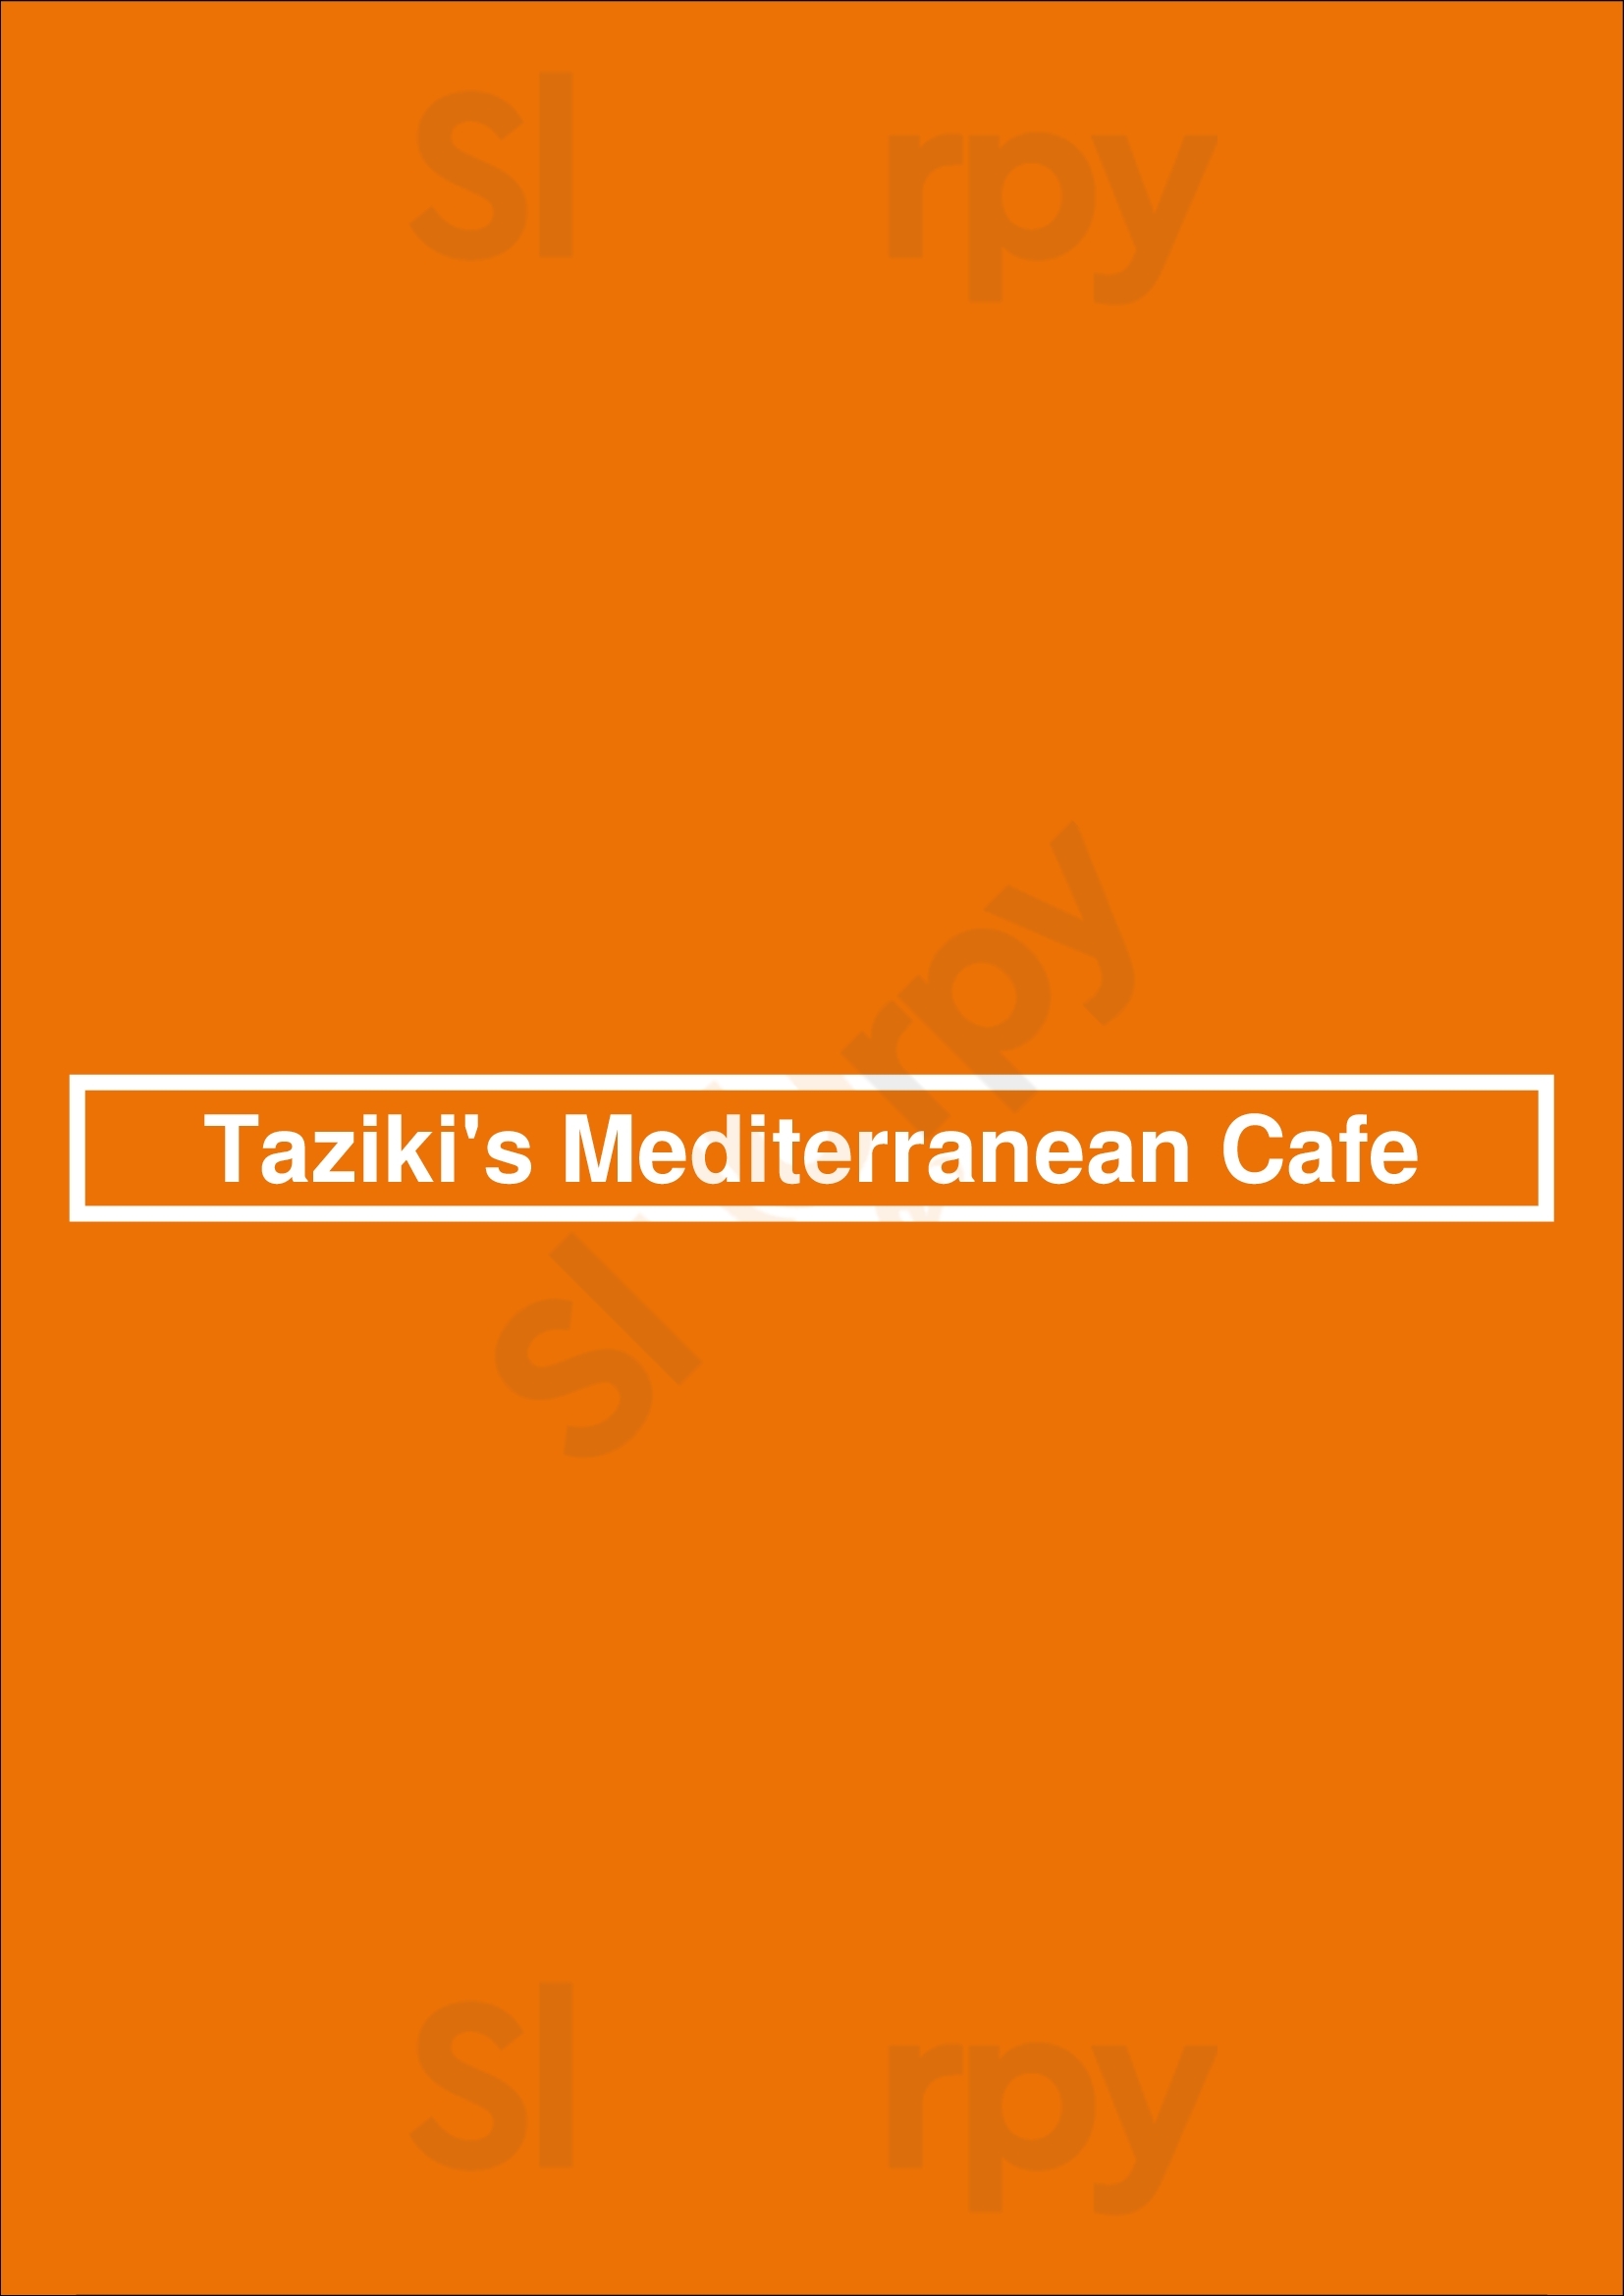 Taziki's Mediterranean Cafe Charlotte Menu - 1